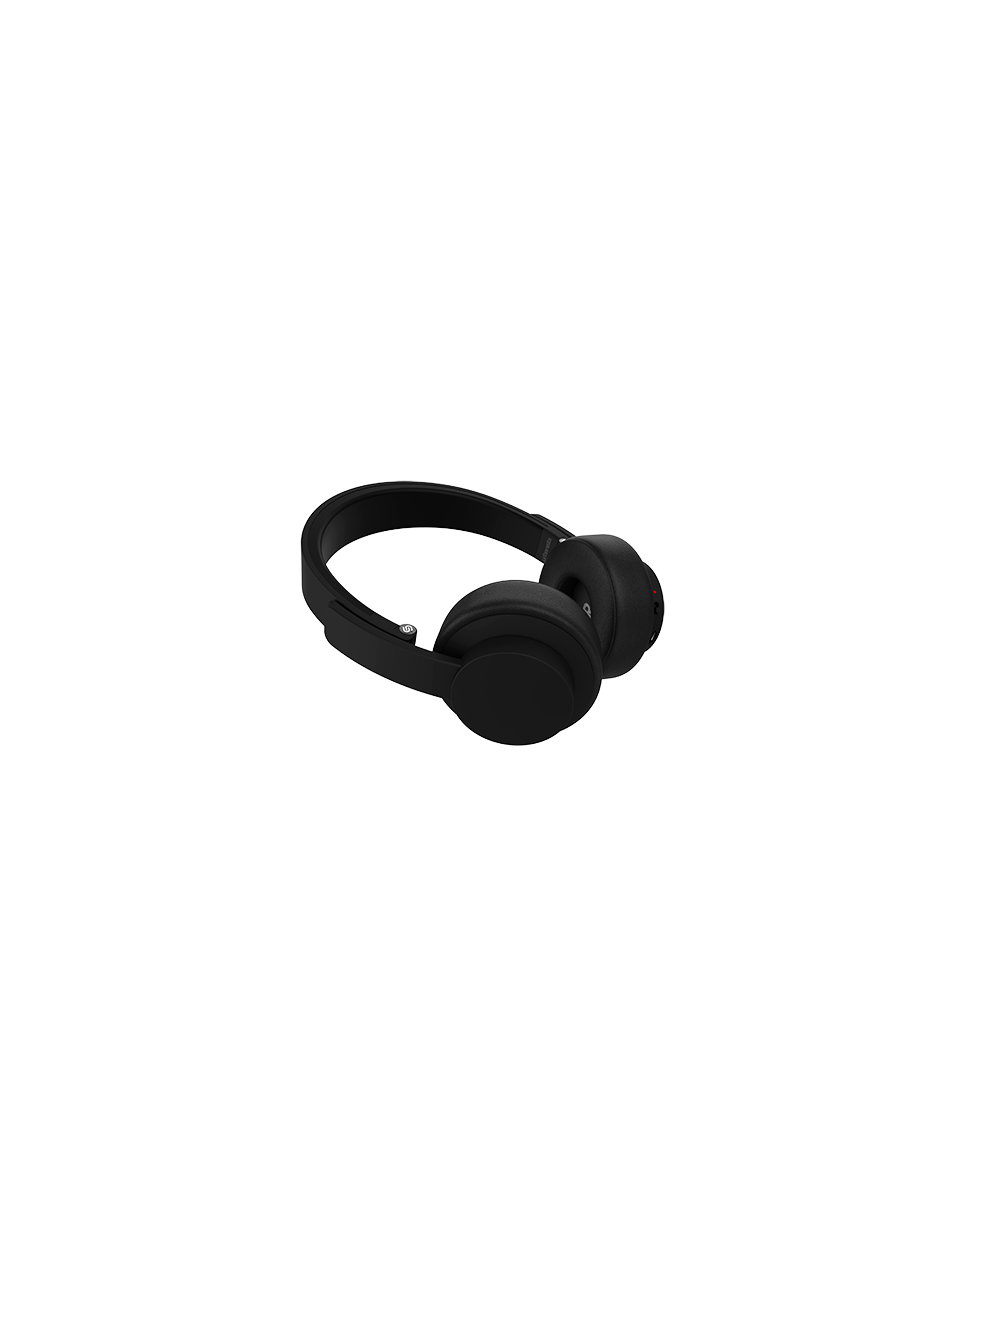 Seattle Wireless Headphones Black